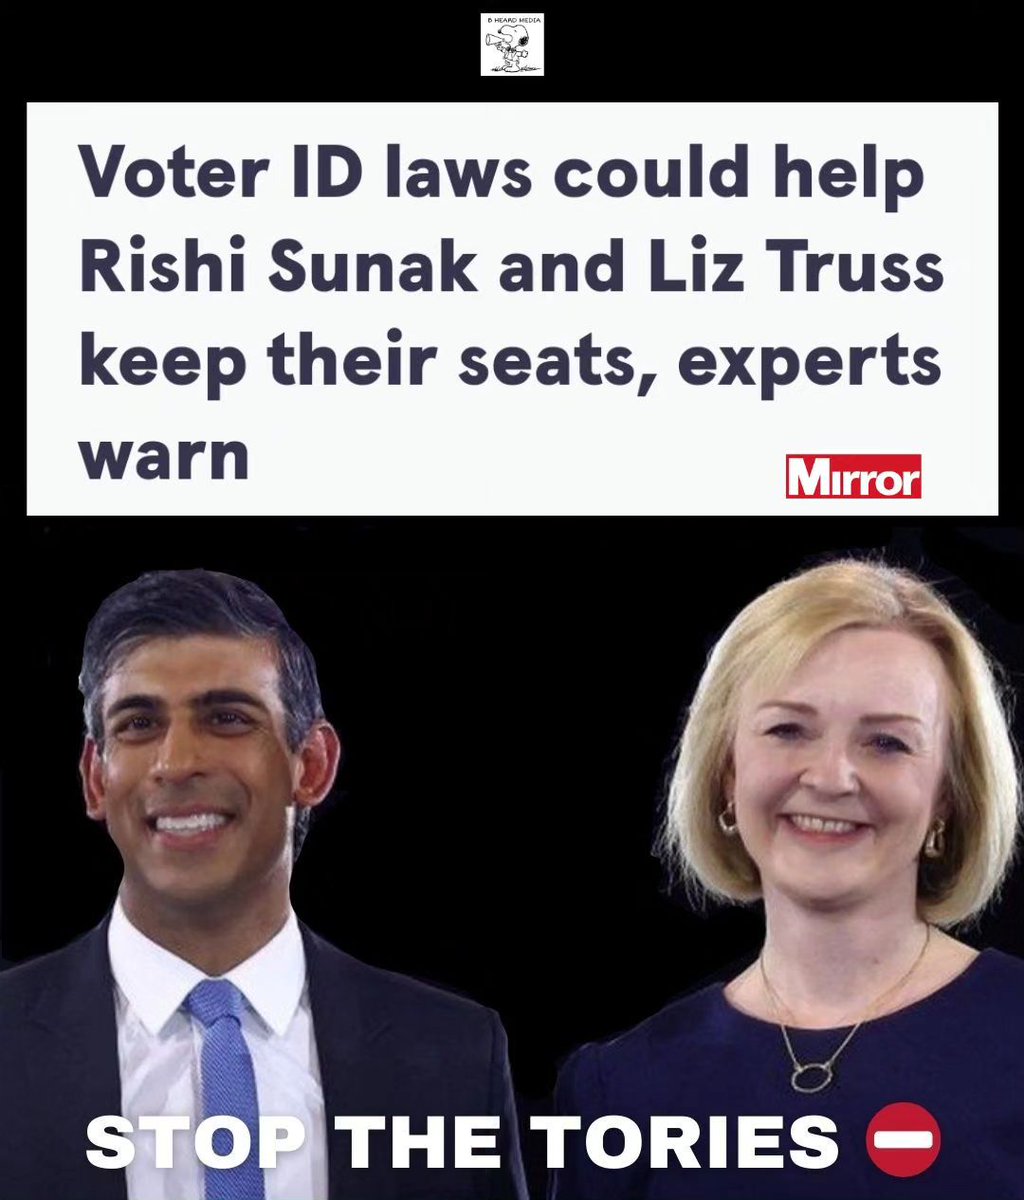 Voter ID laws could help Rishi Sunak and Liz Truss keep their seats, experts warn.

#toriesout #ToriesOut651 #torycorruption #torydictatorship #torycriminalsunfittogovern #toriesoutnow